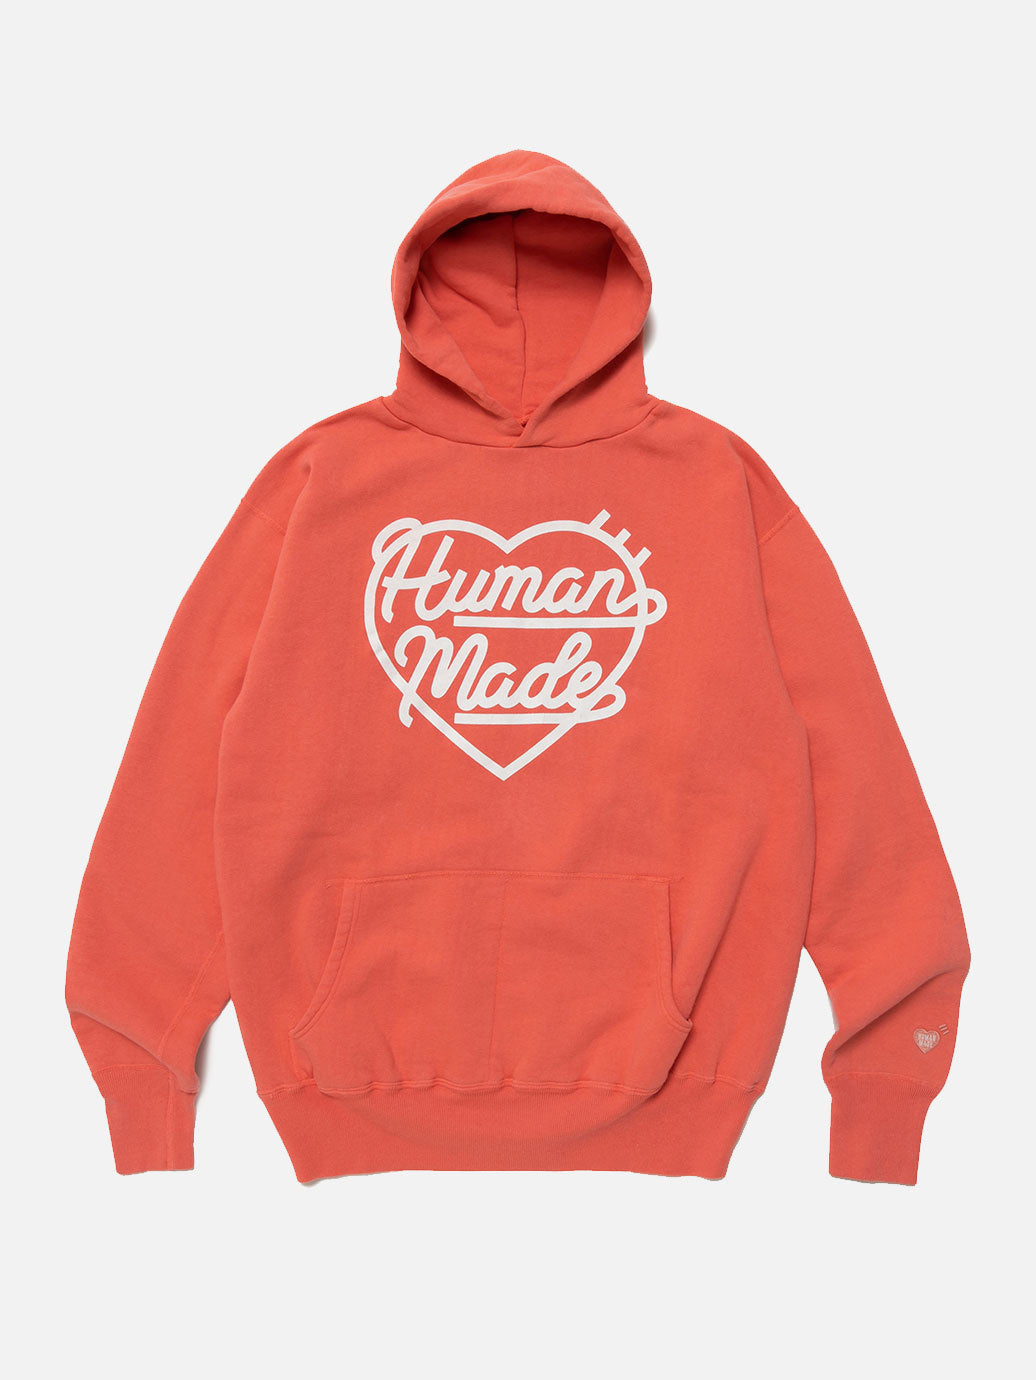 Human Made Tsuriami Hoodie #1 SS23 Pink